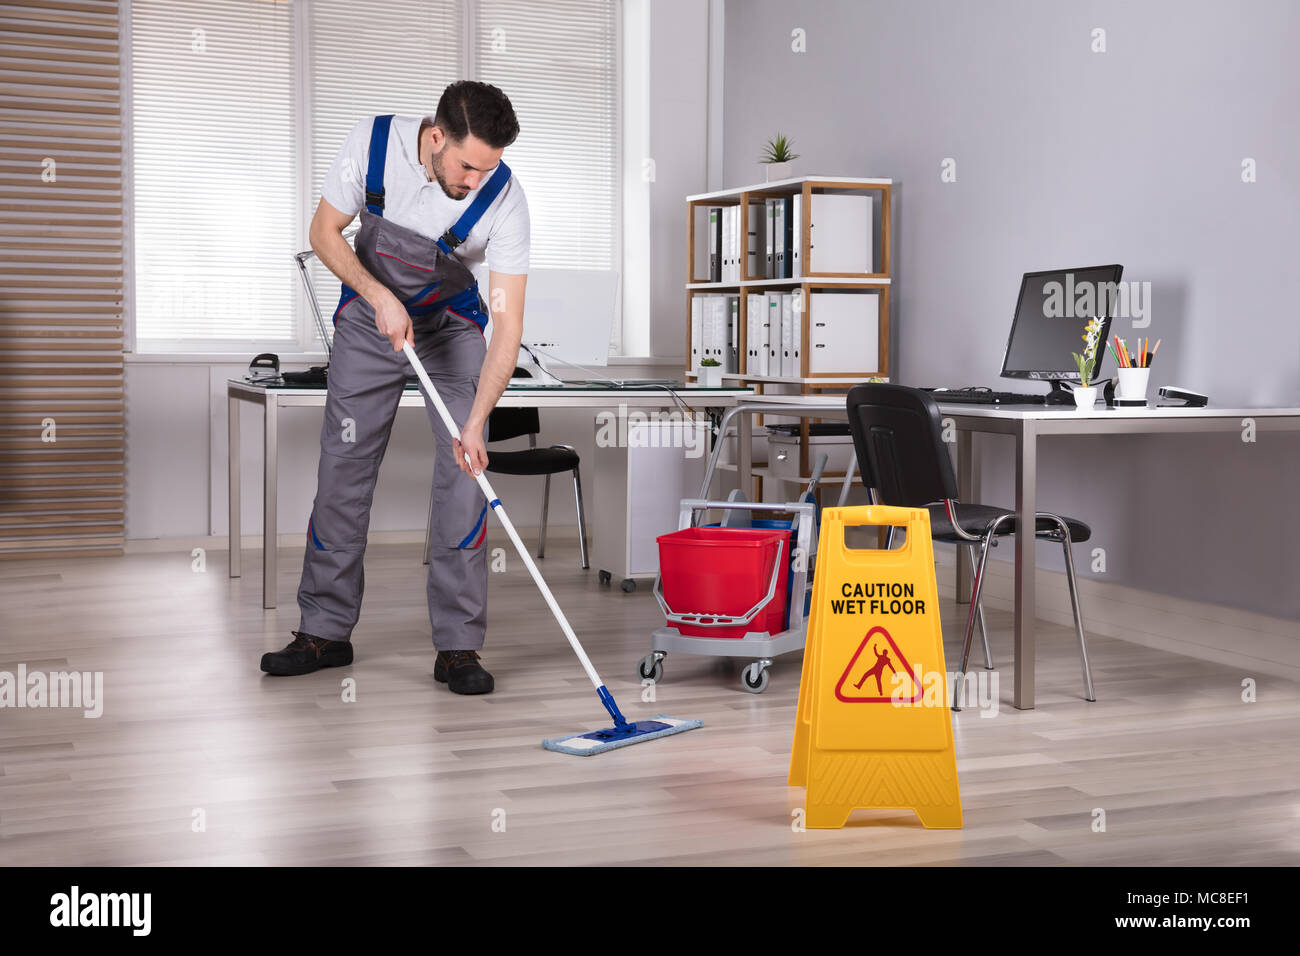 https://c8.alamy.com/comp/MC8EF1/man-cleaning-office-with-mop-near-caution-wet-floor-sign-MC8EF1.jpg